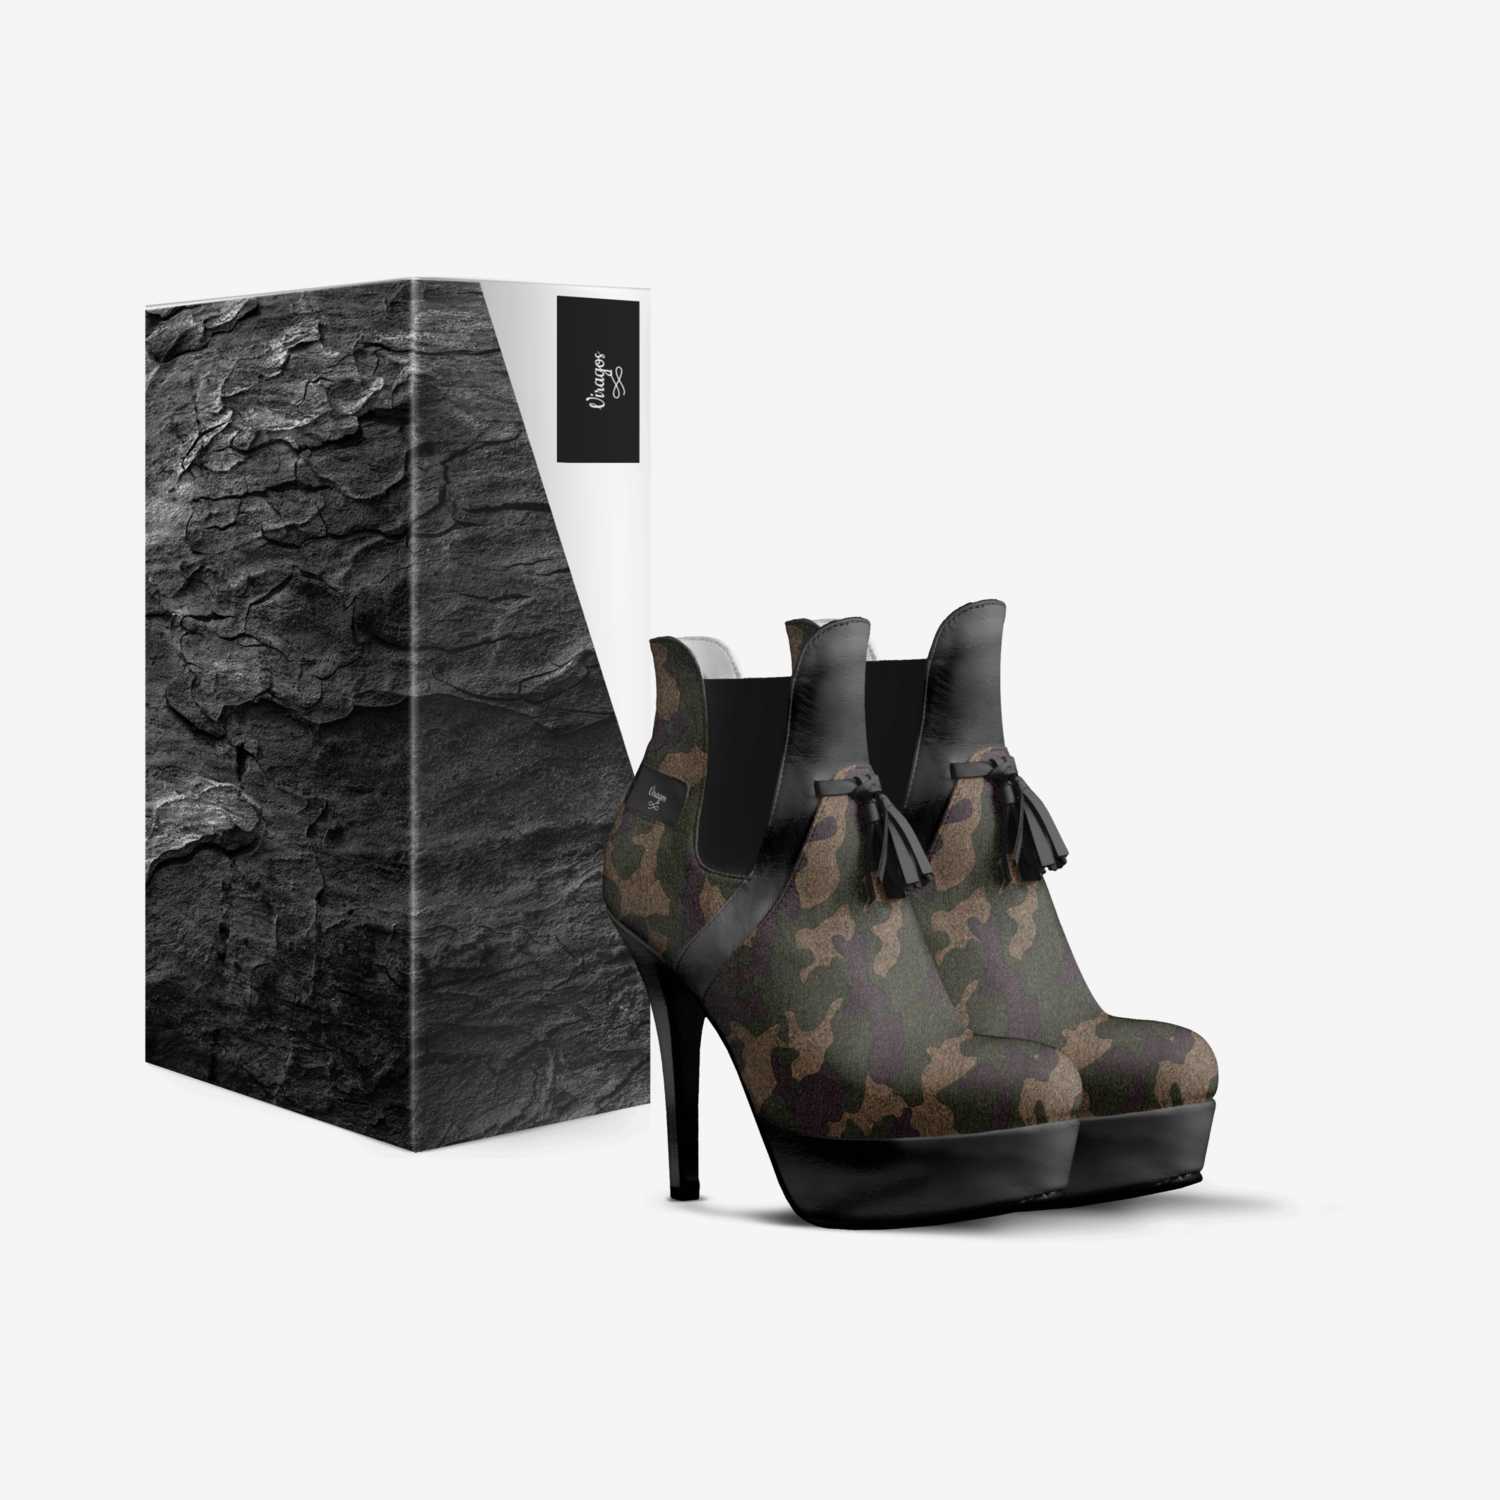 Viragos custom made in Italy shoes by Alyssa Barton | Box view